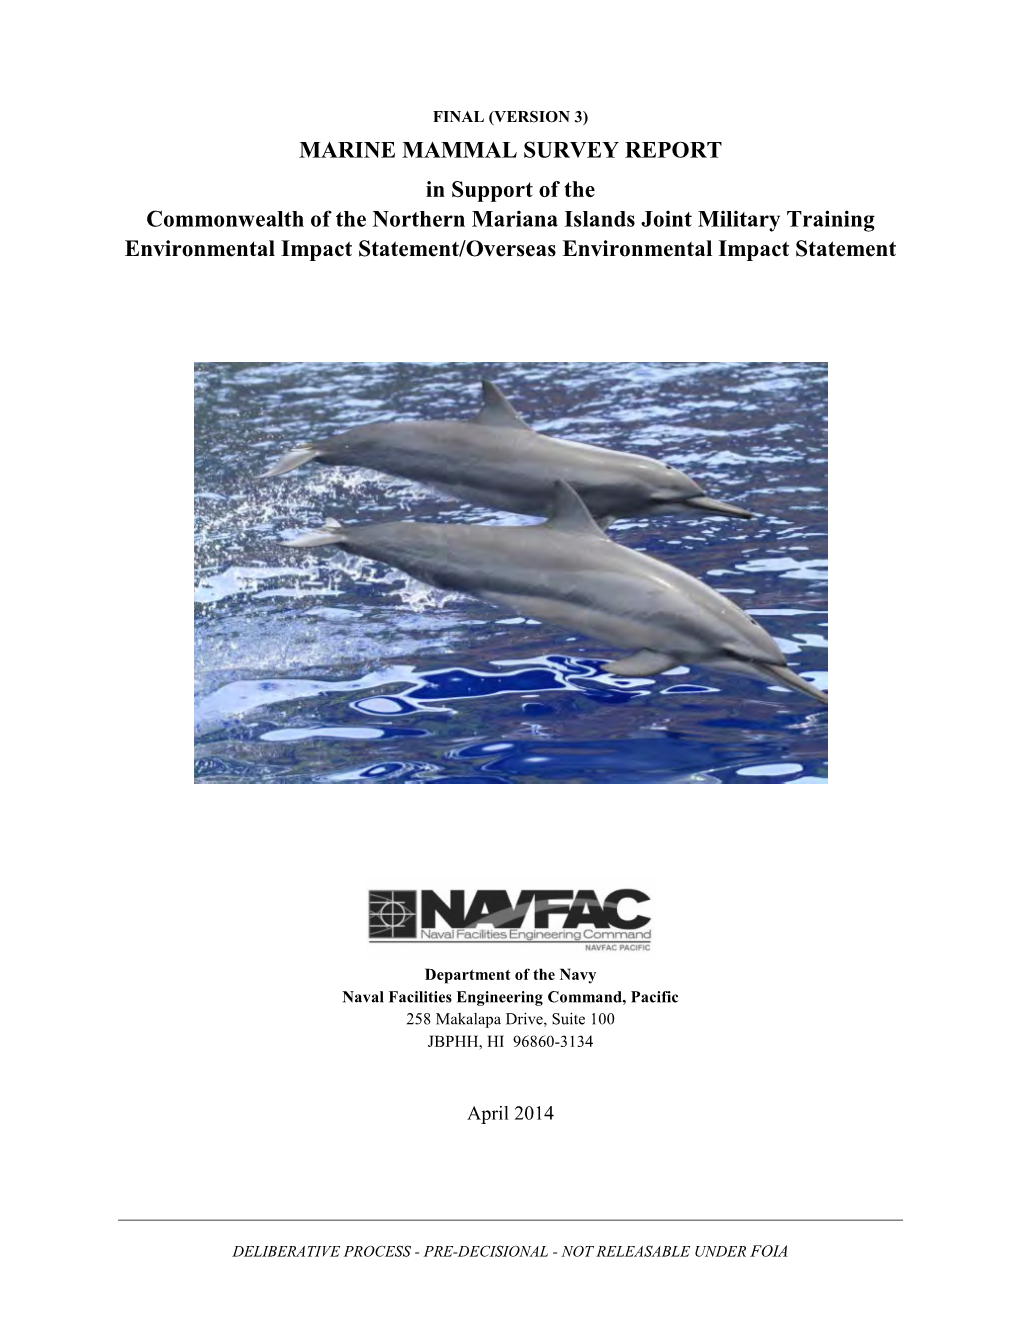 Marine Mammals Survey Report